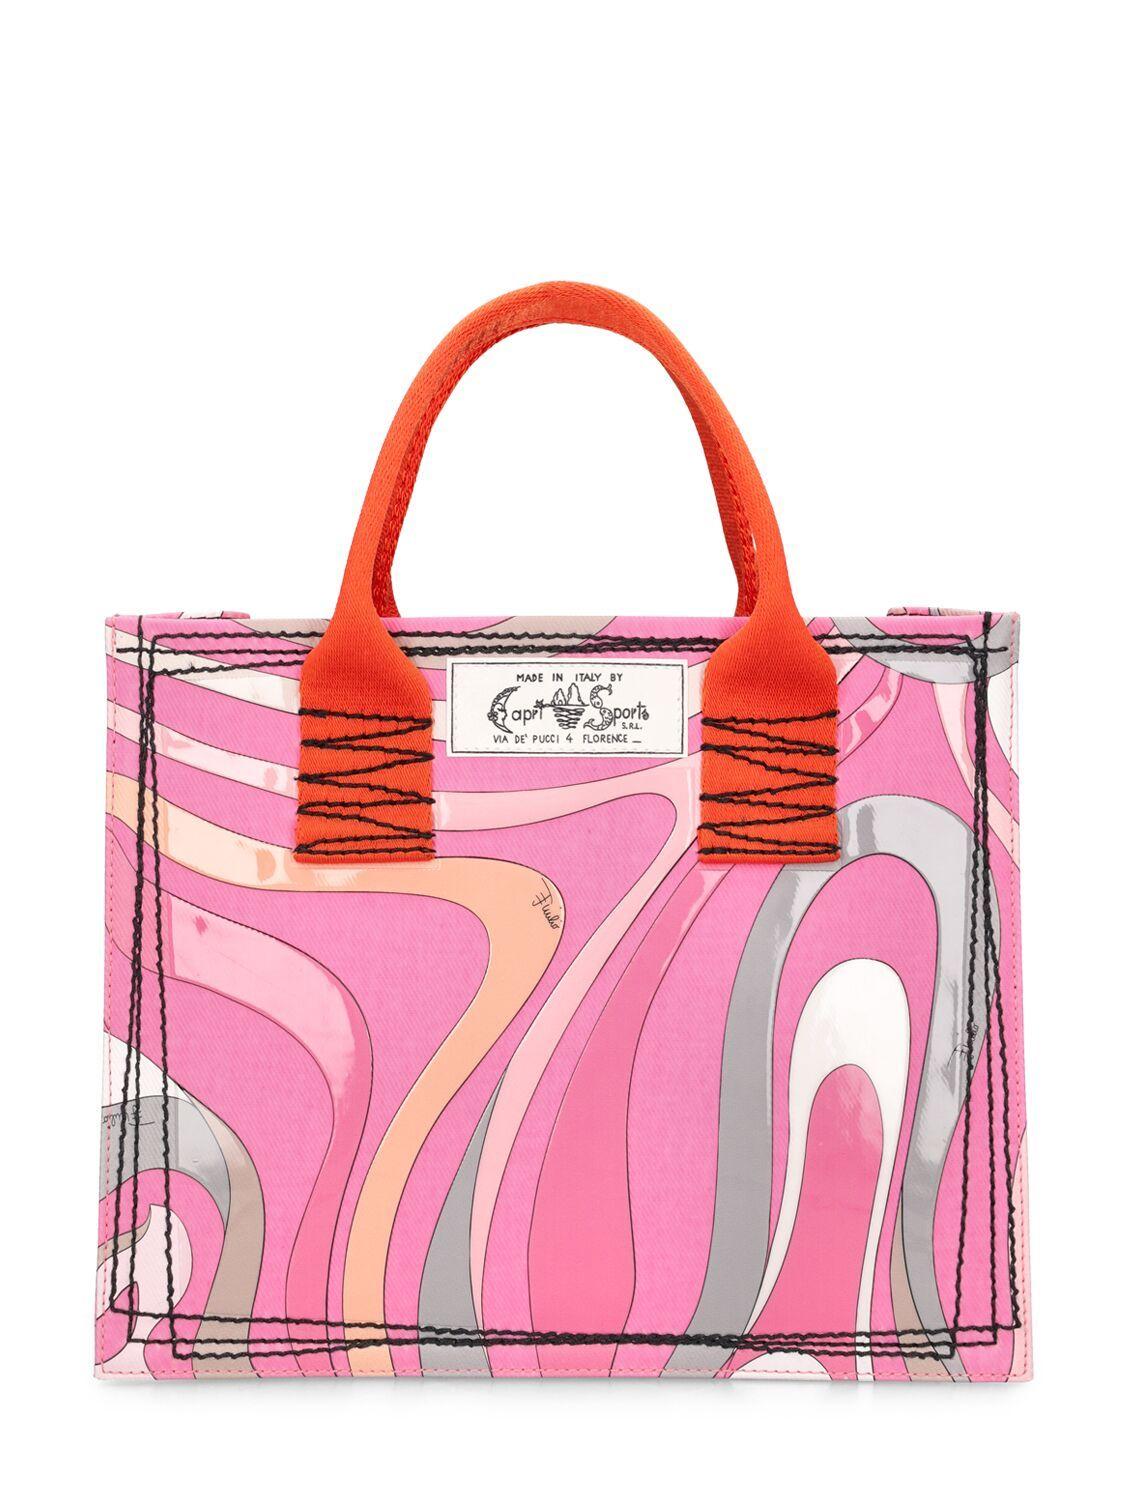 EMILIO PUCCI, Pink Women's Handbag